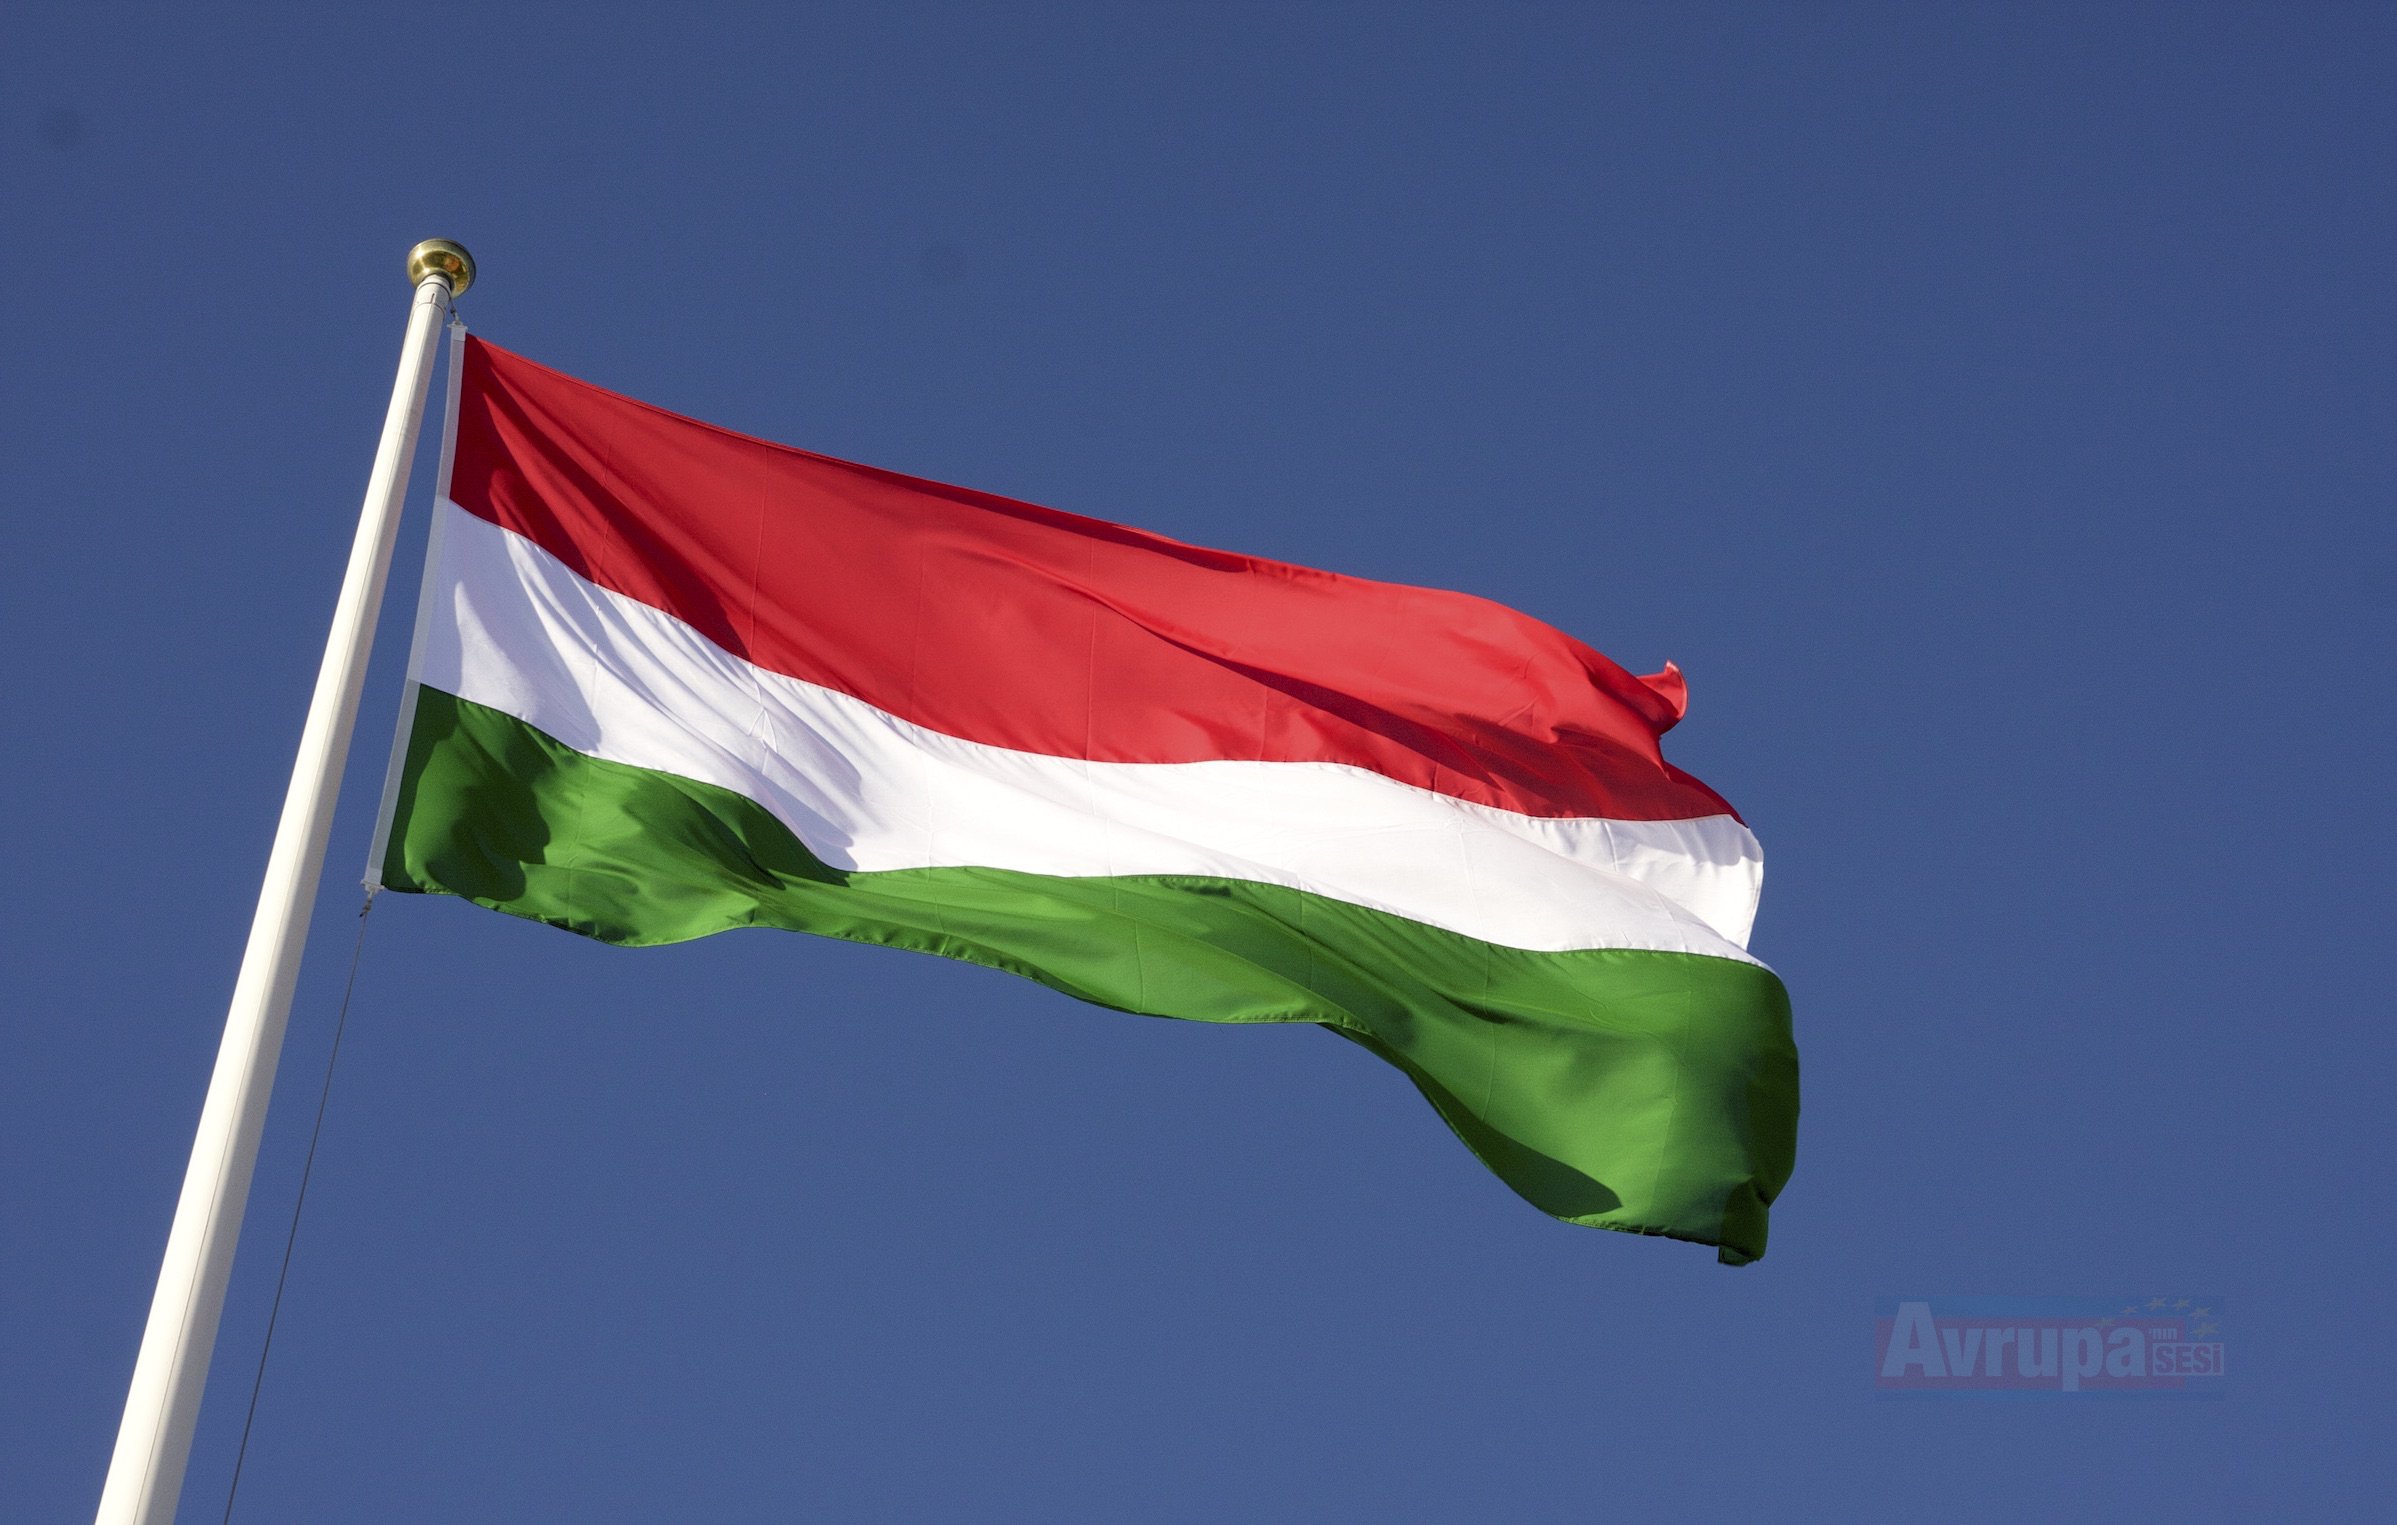 Macaristan'da Soros ve Juncker karşıtı kampanya düzenleyecek